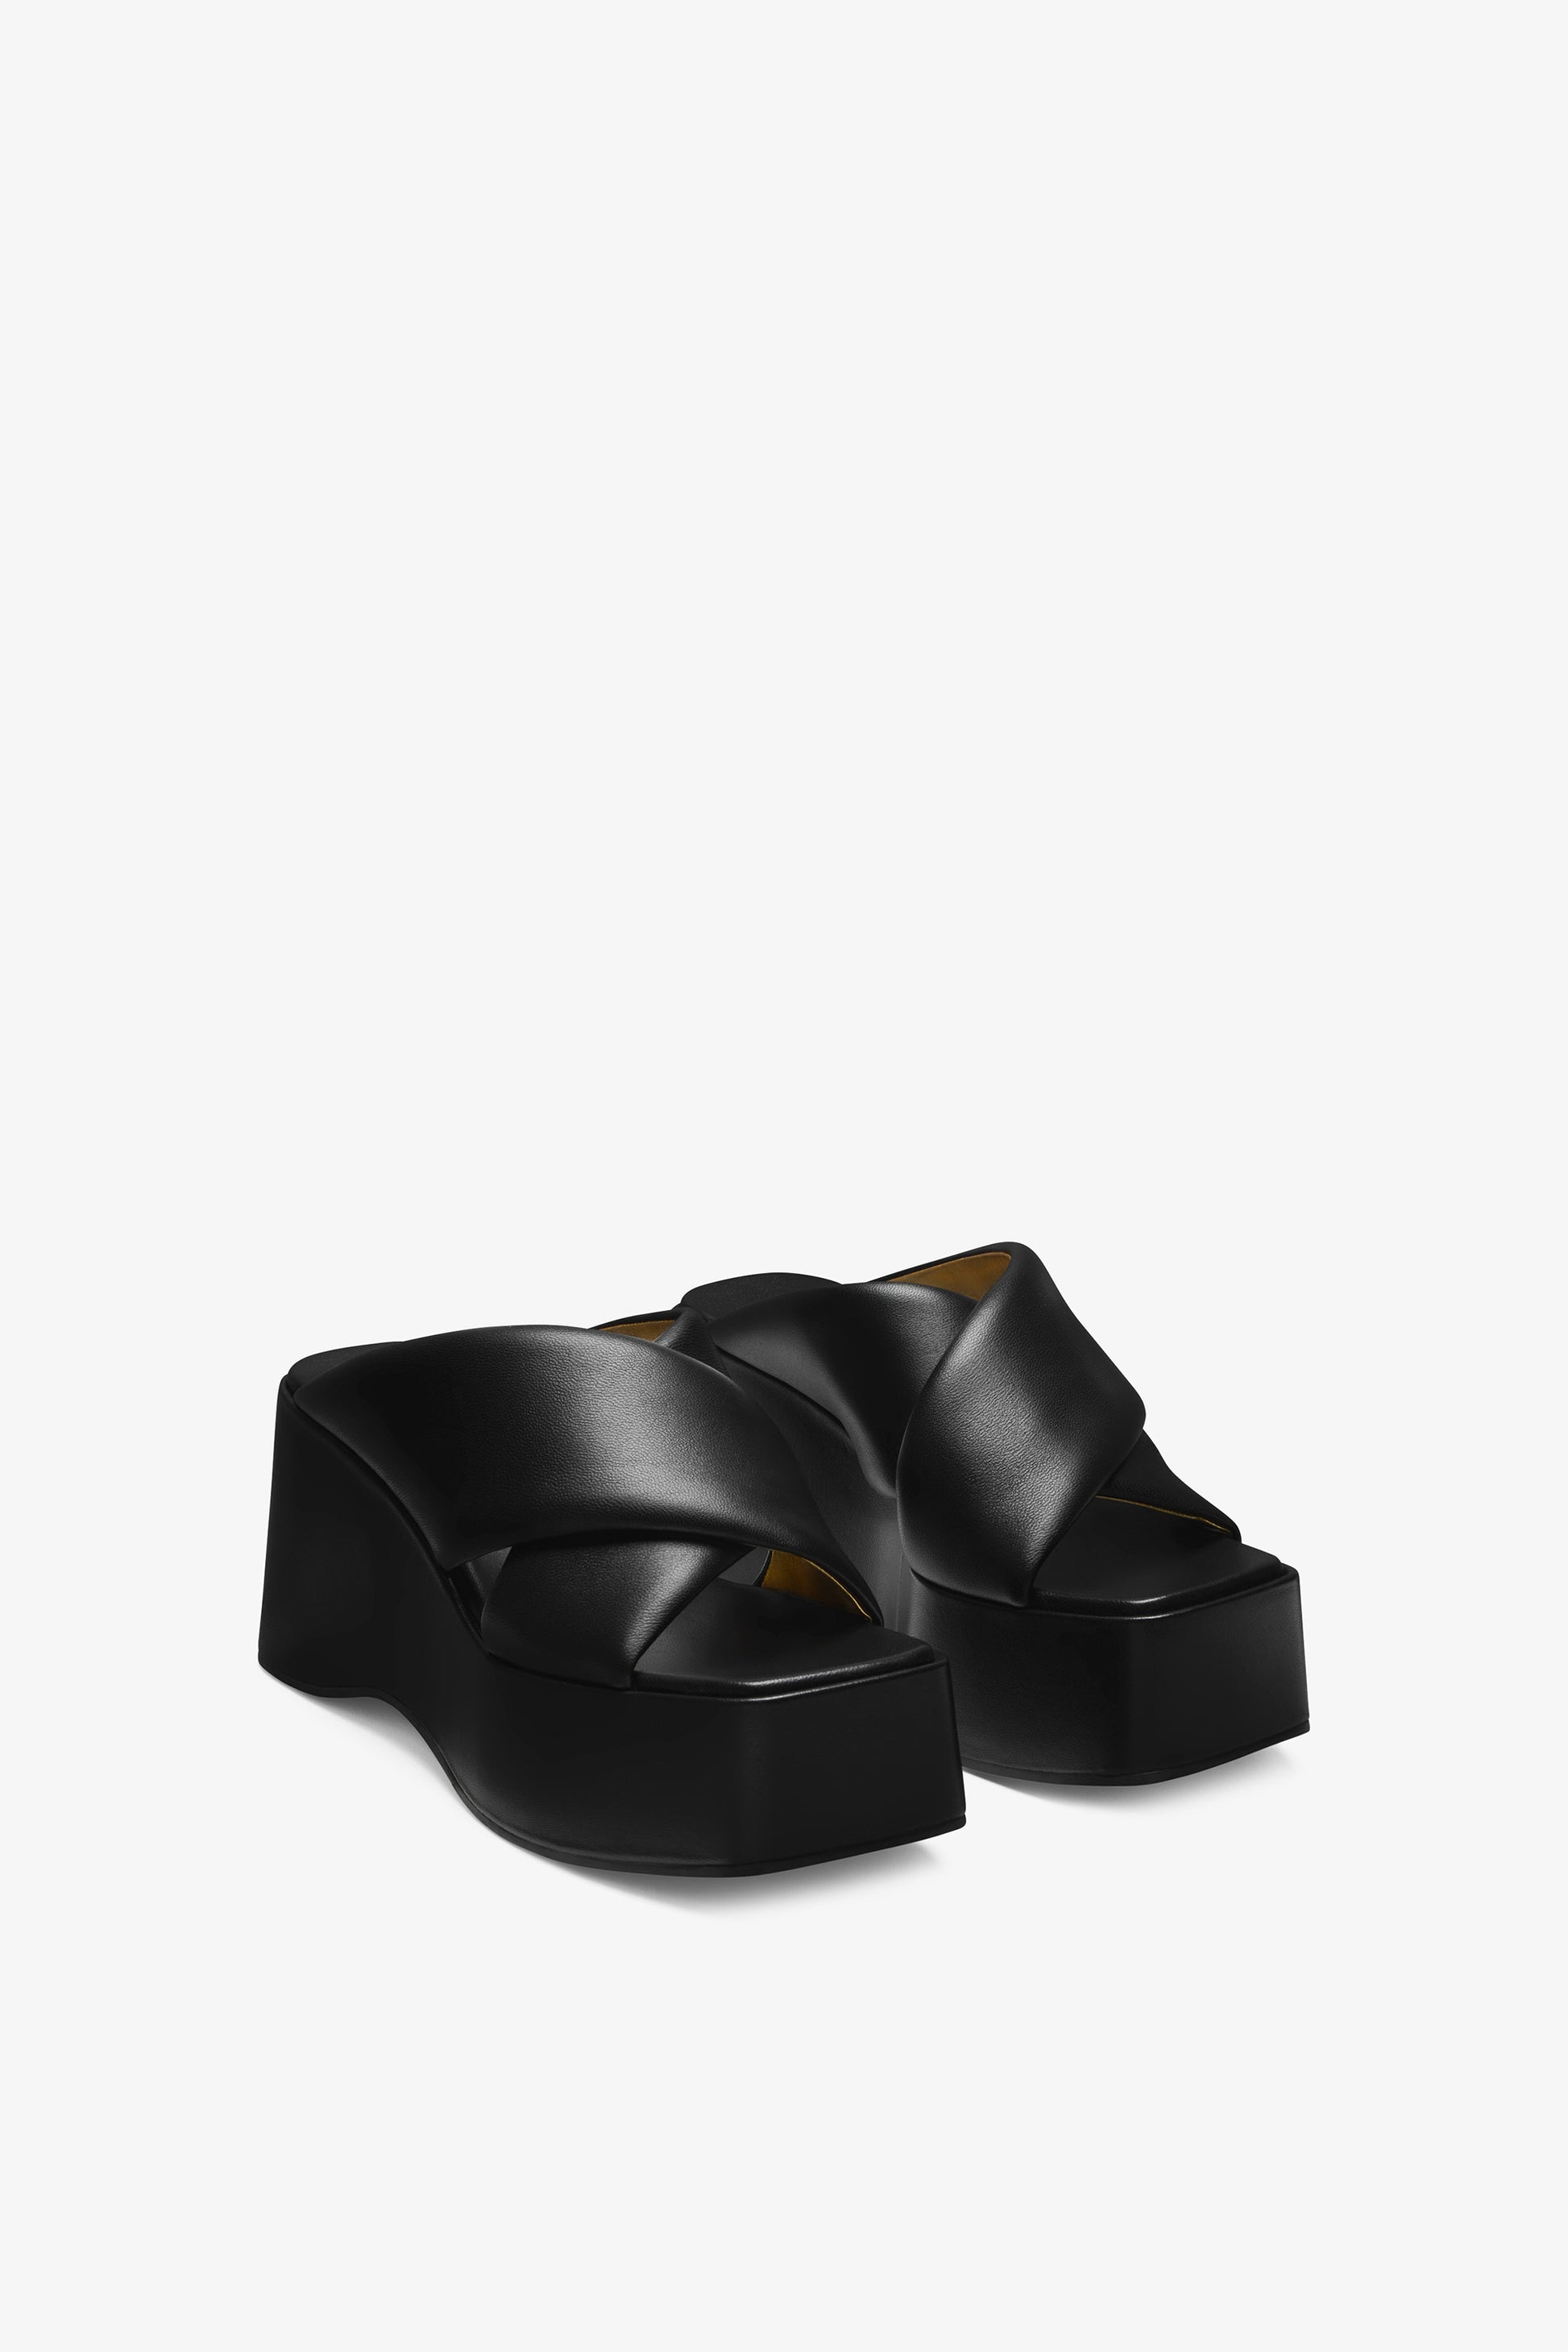 Zapato con cuna de piel gofrada negra